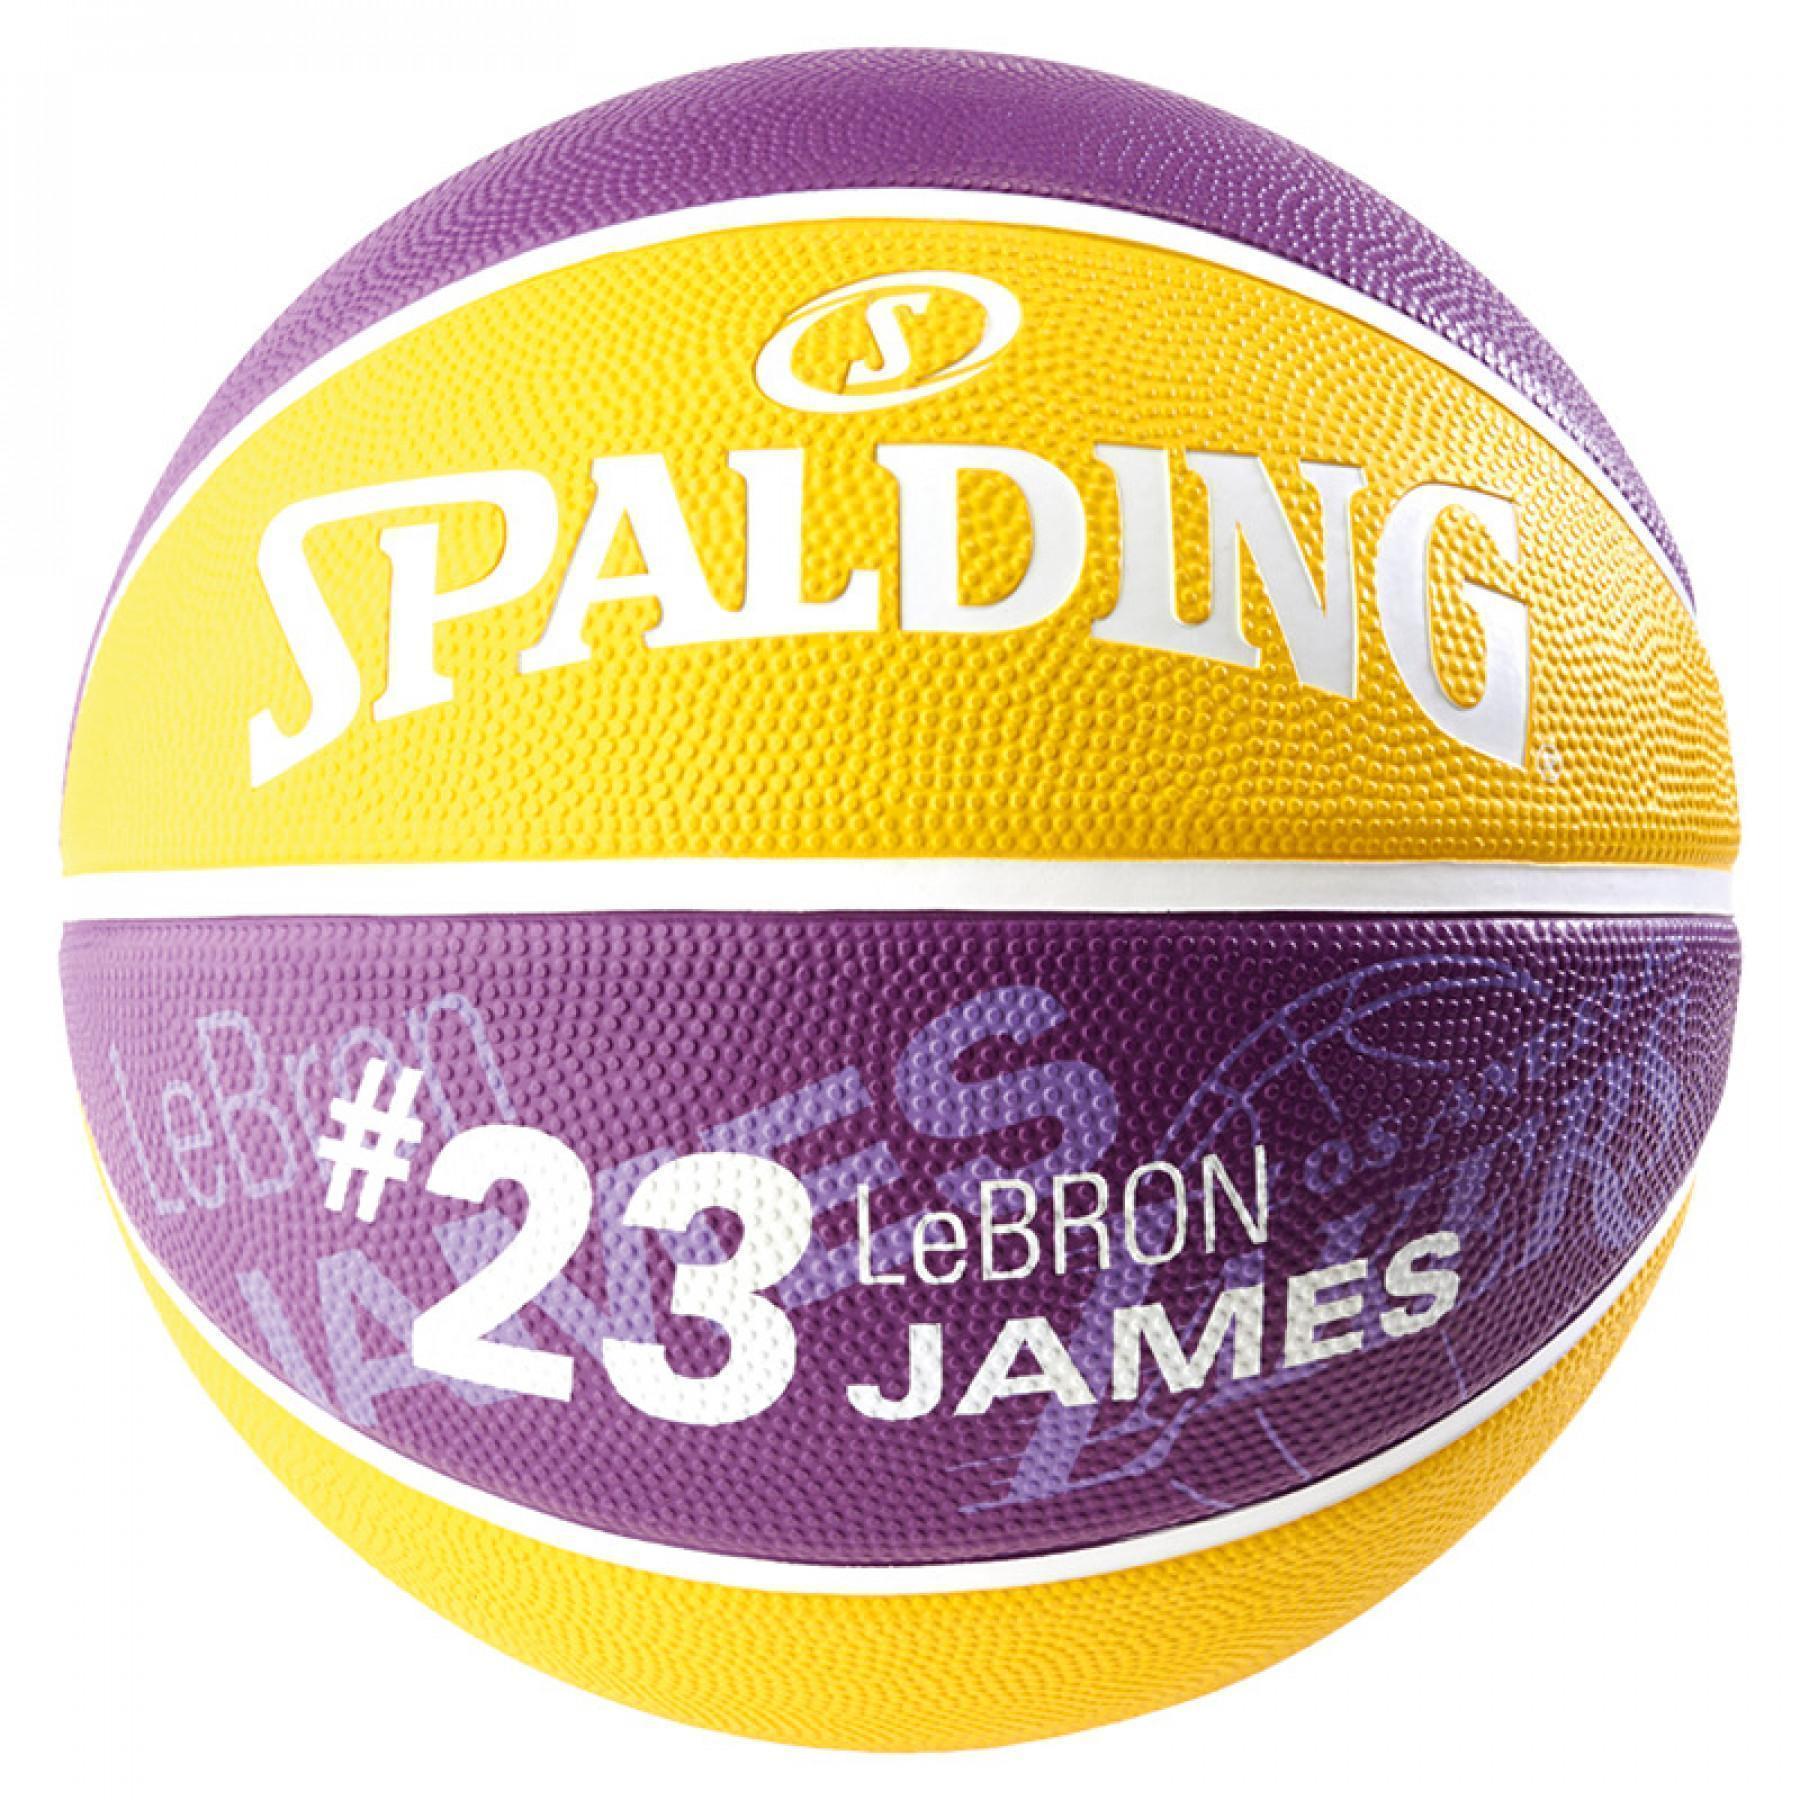 Globo Spalding NBA Player Lebron James (83-863z)